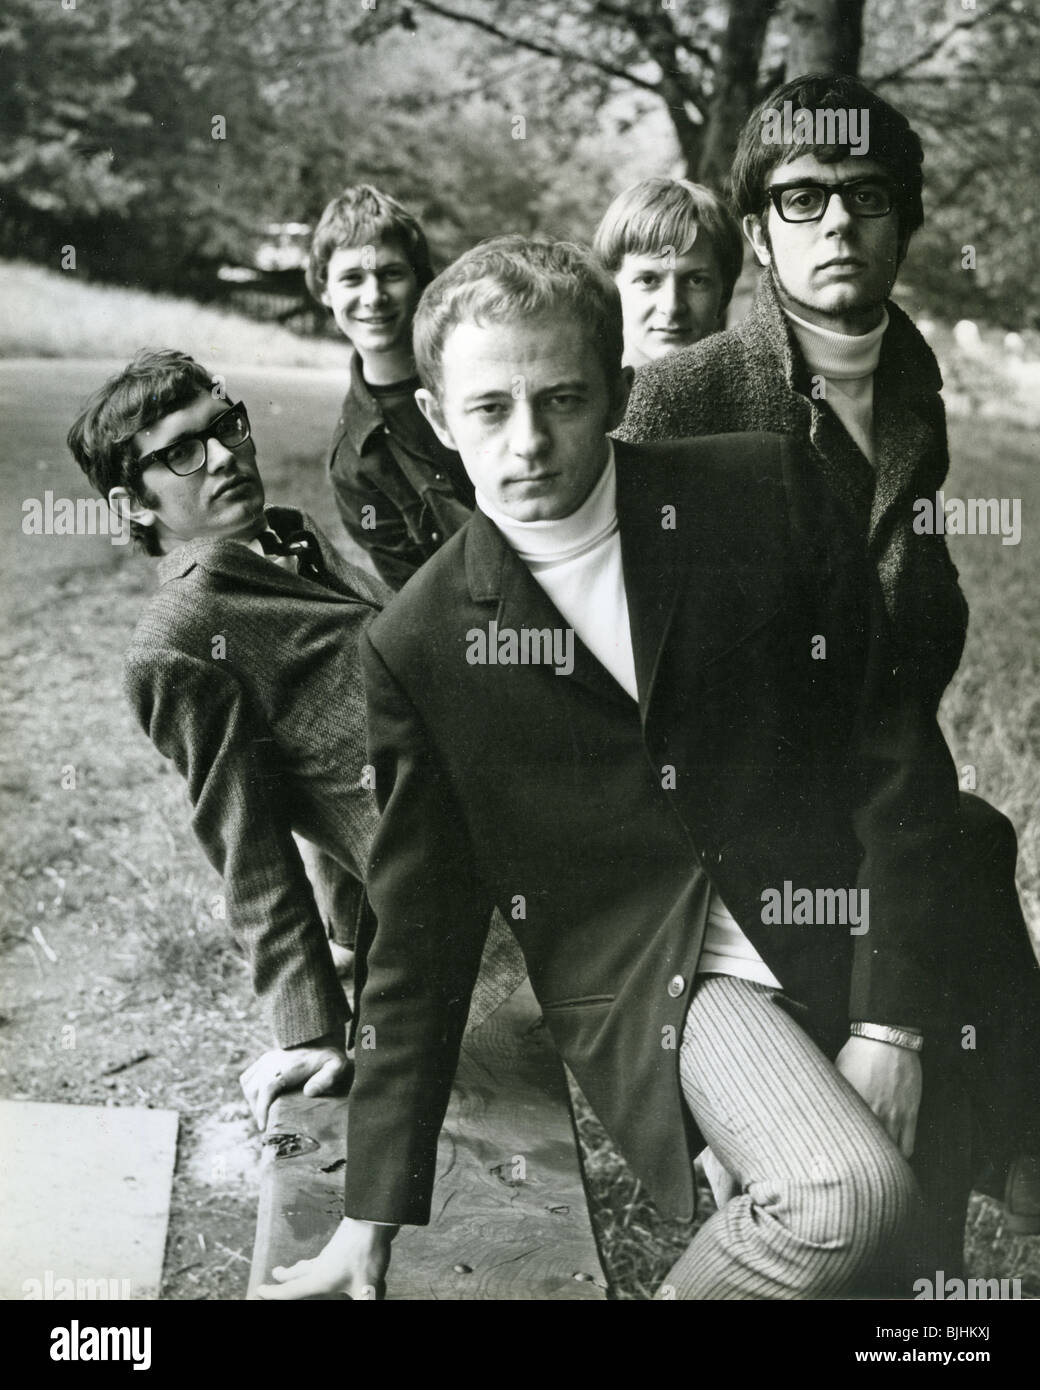 MANFRED MANN - grupo británico en 1964 con Paul Jones - ver descripción abajo para alineación Foto de stock